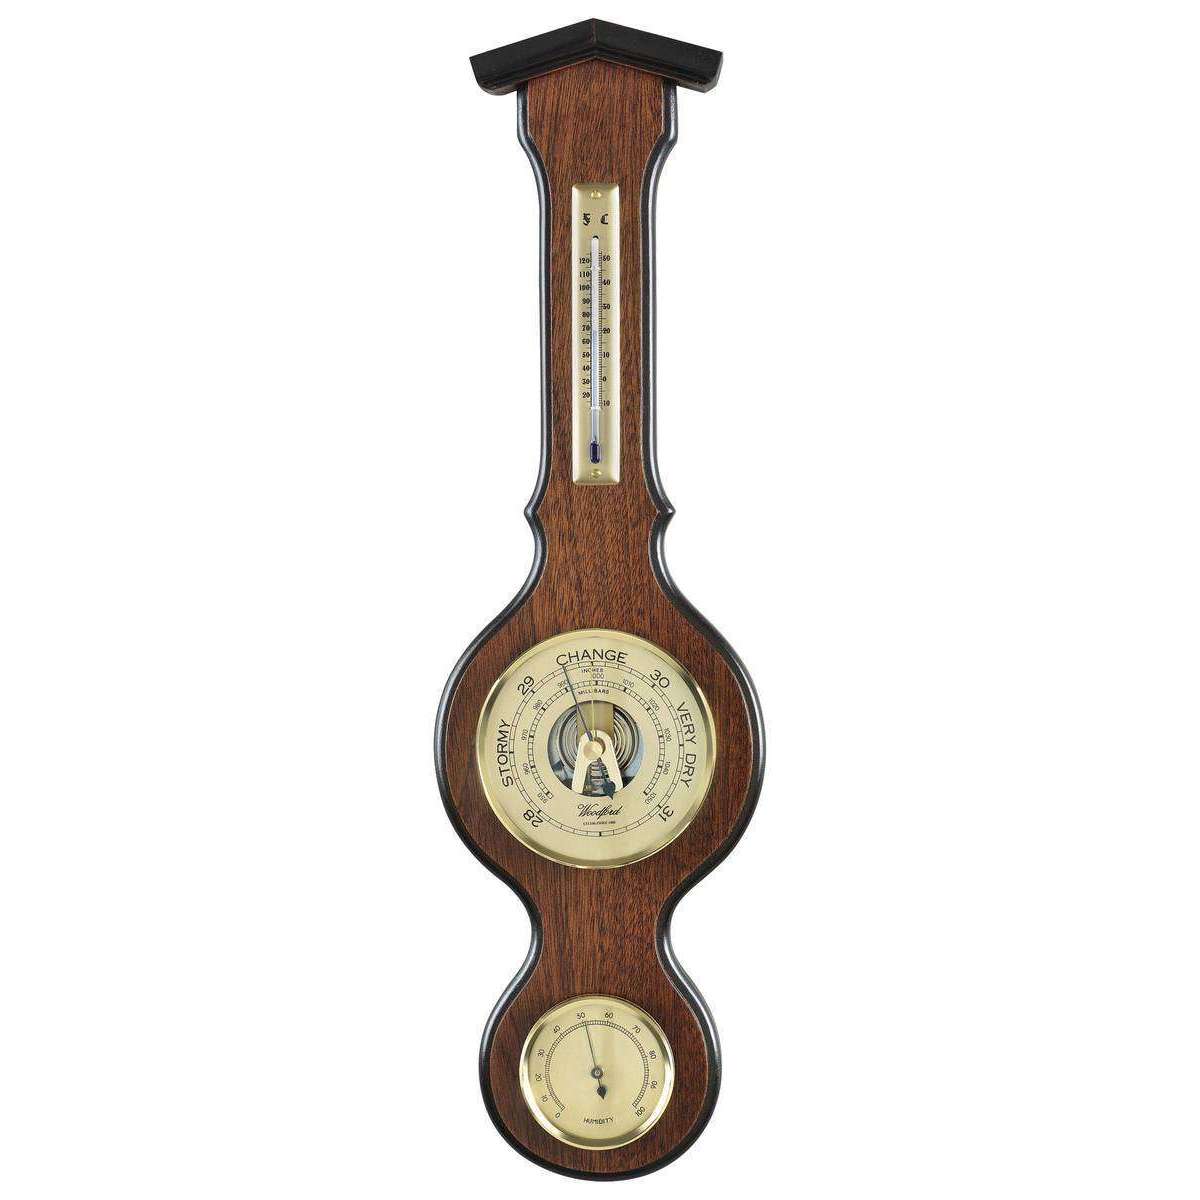 Woodford Veneered Barometer, Thermometer and Hygrometer - Brown/Bronze